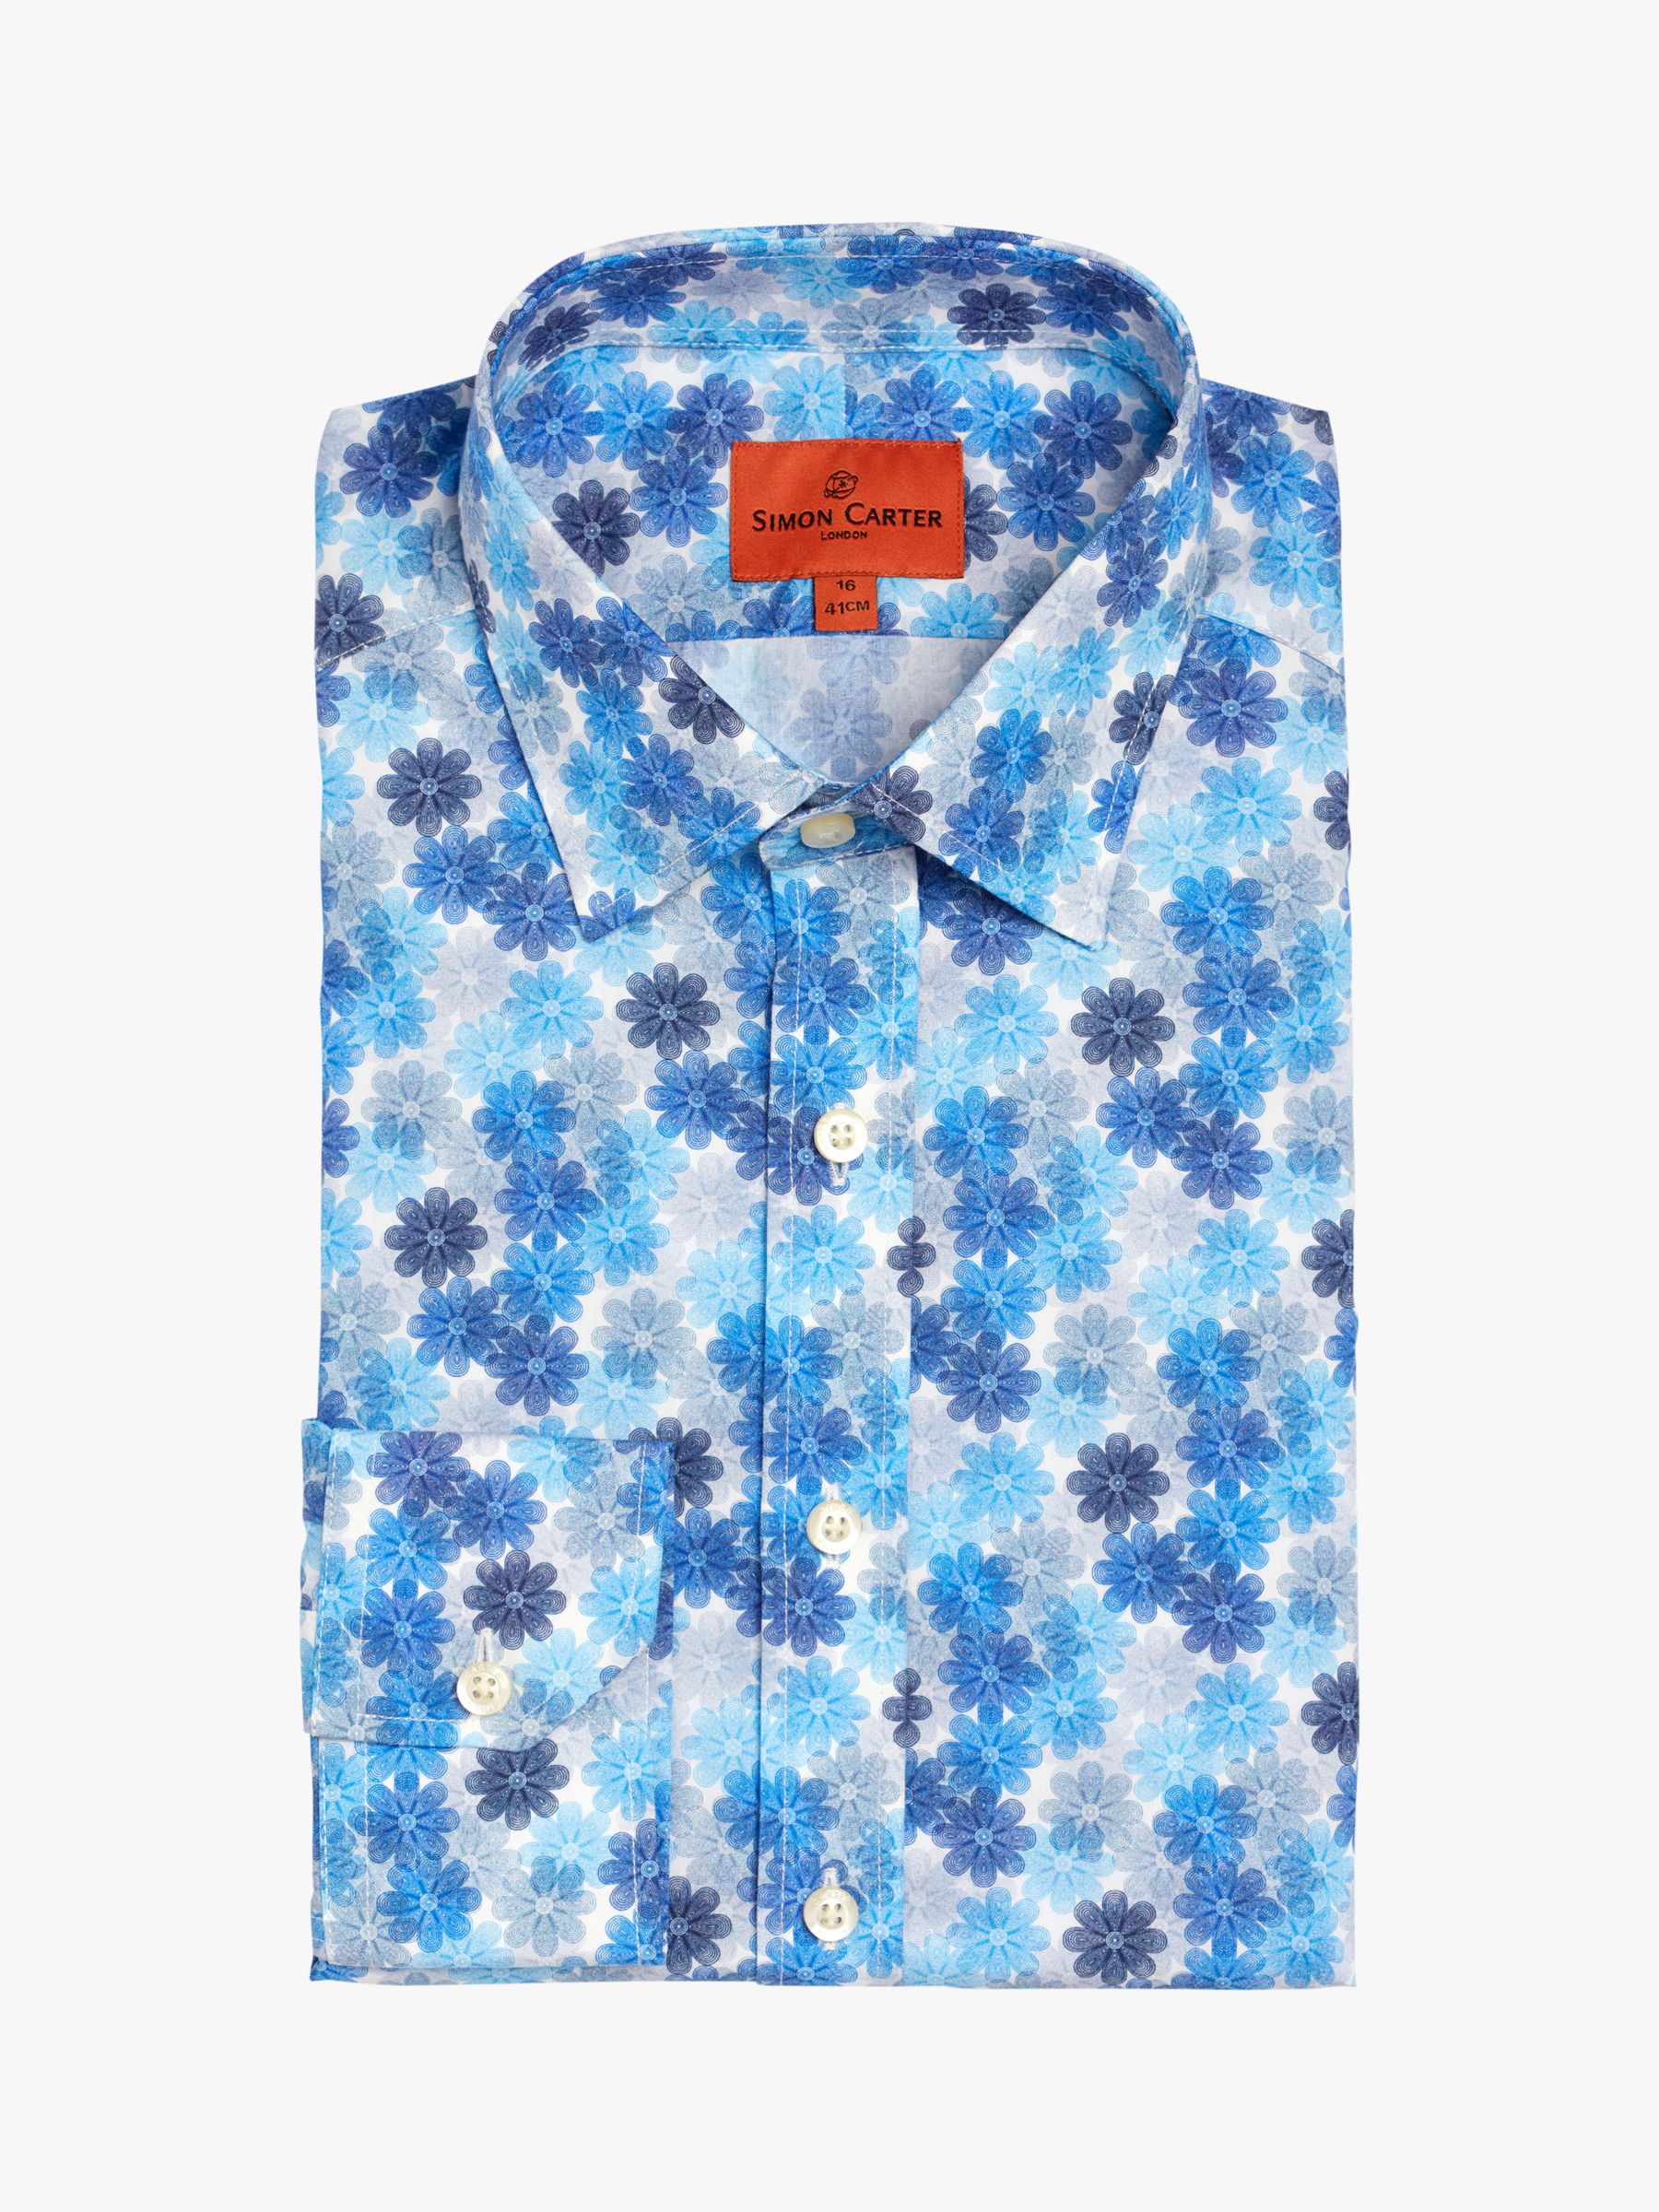 Simon Carter Spriograph Floral Shirt, Blue/Multi, 15.5